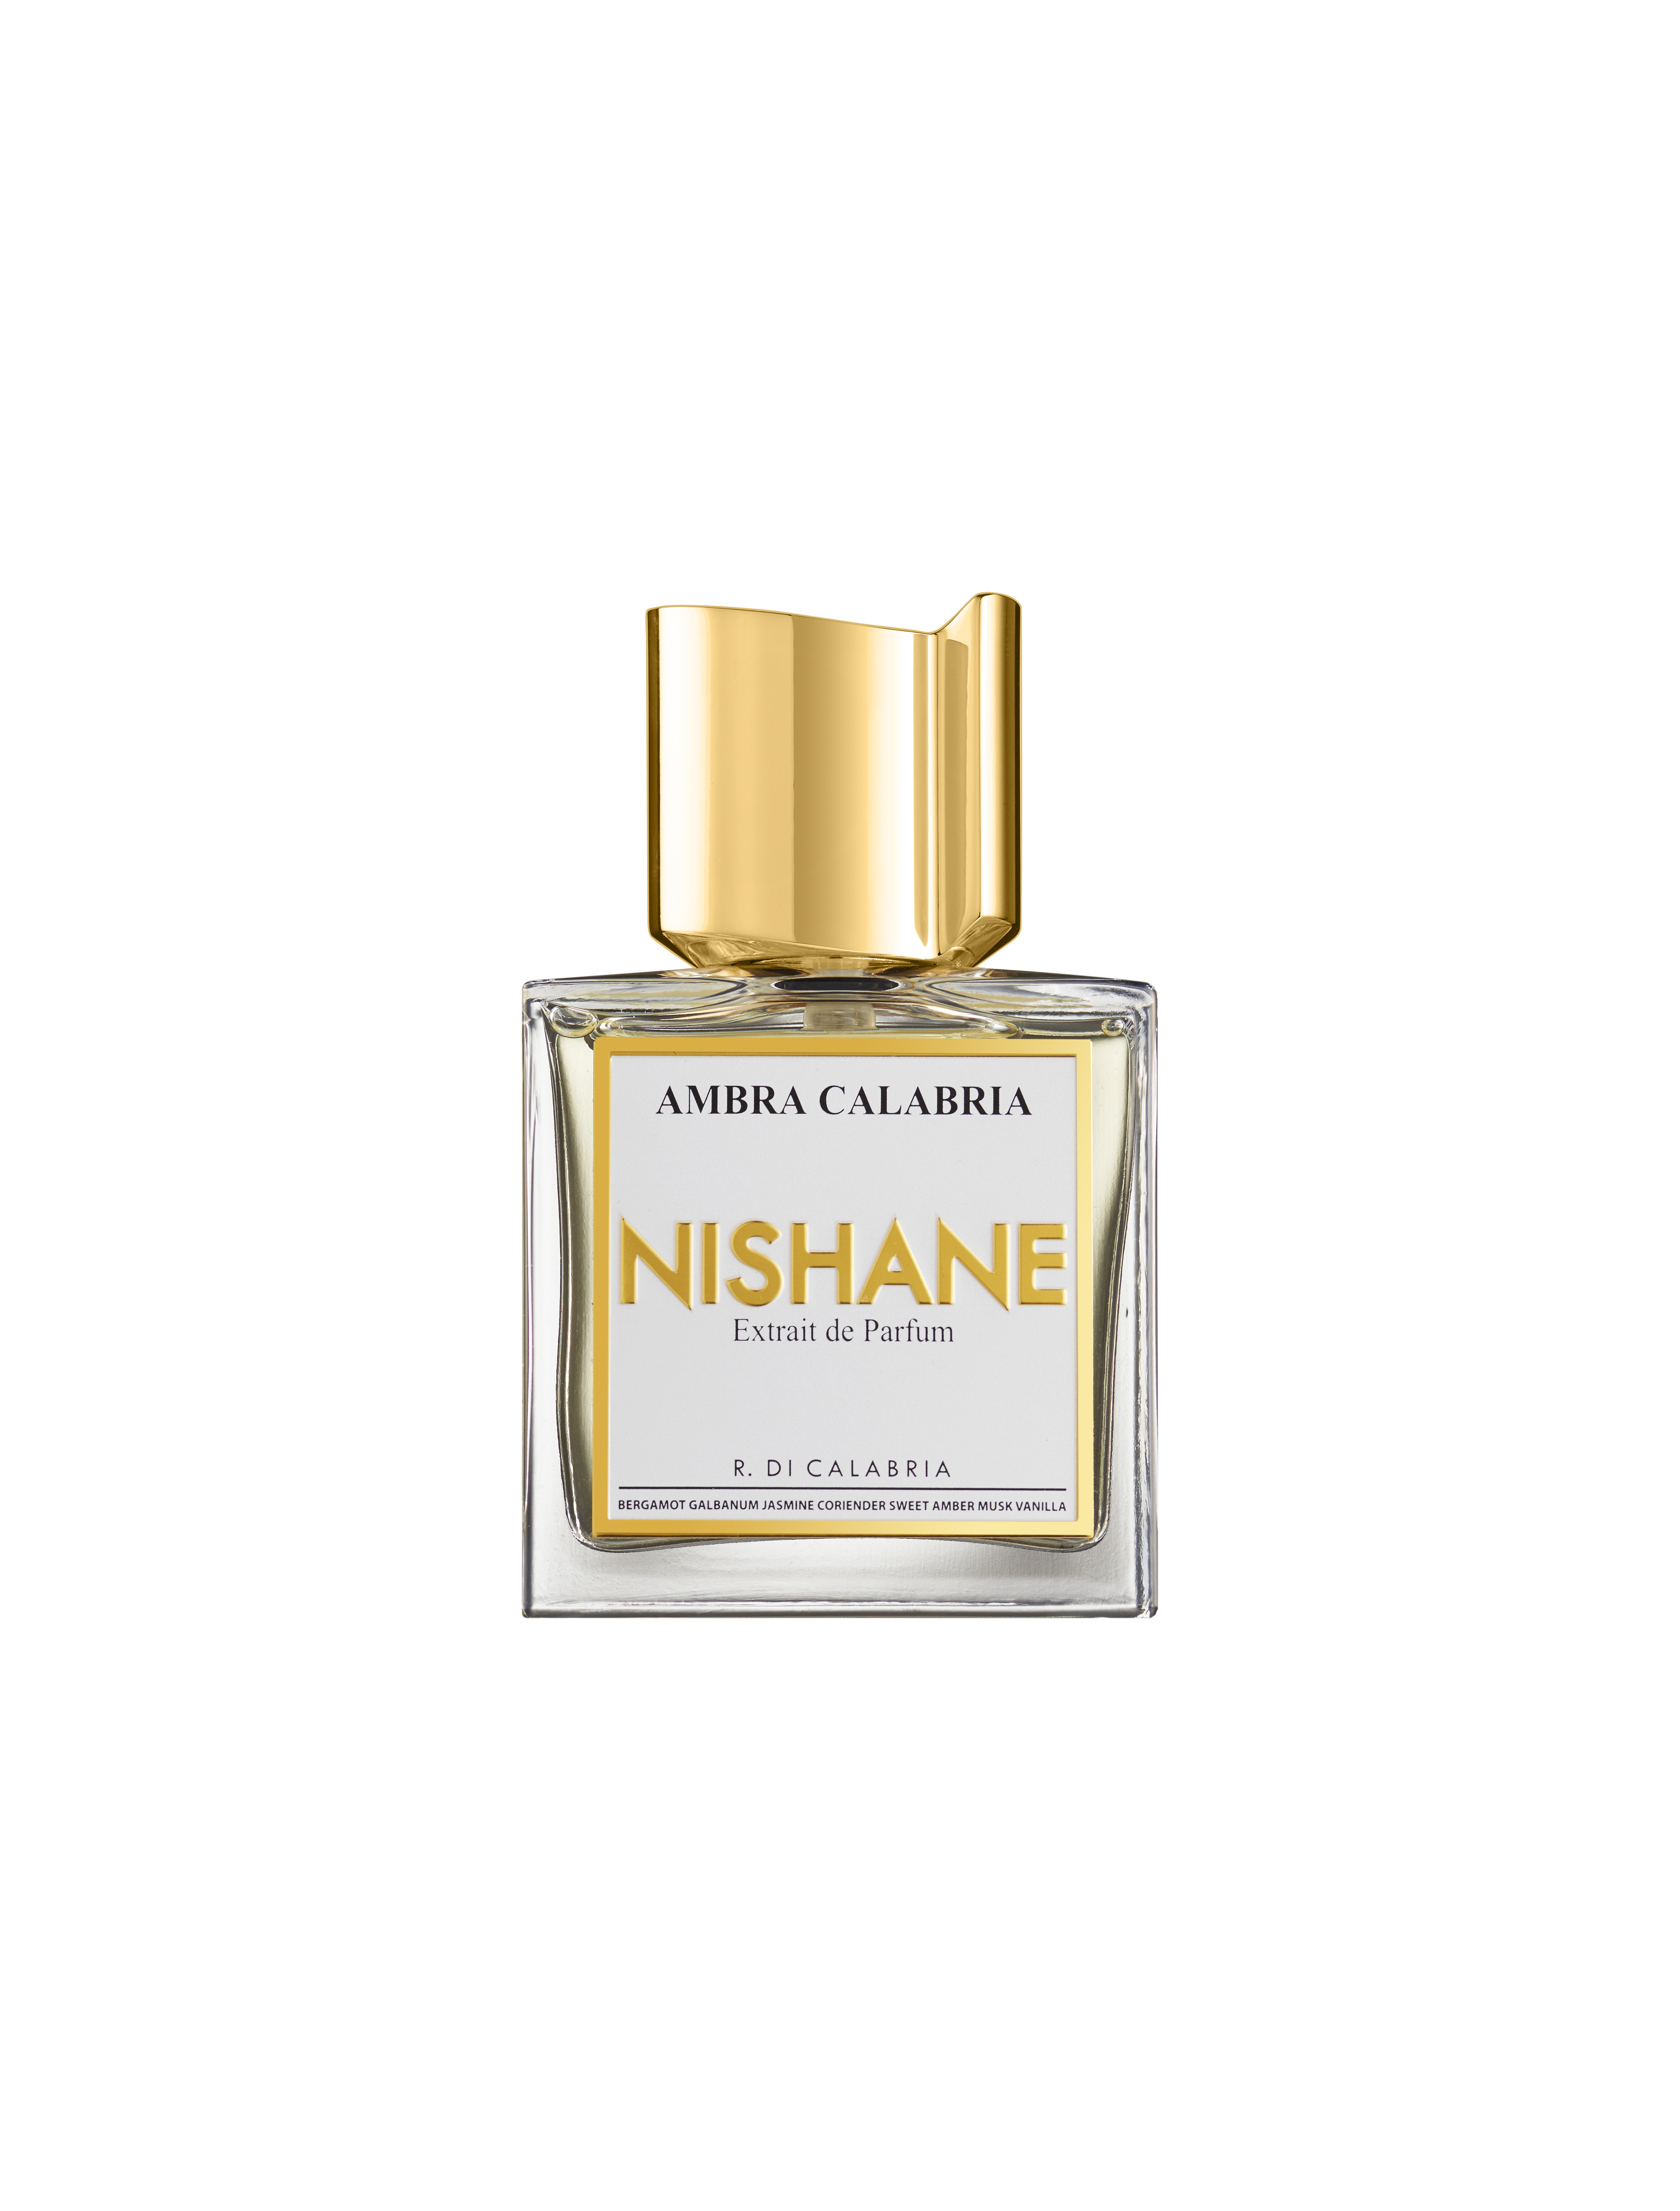 Nishane - Ambra Calabria - Extrait de Parfum 50 ml